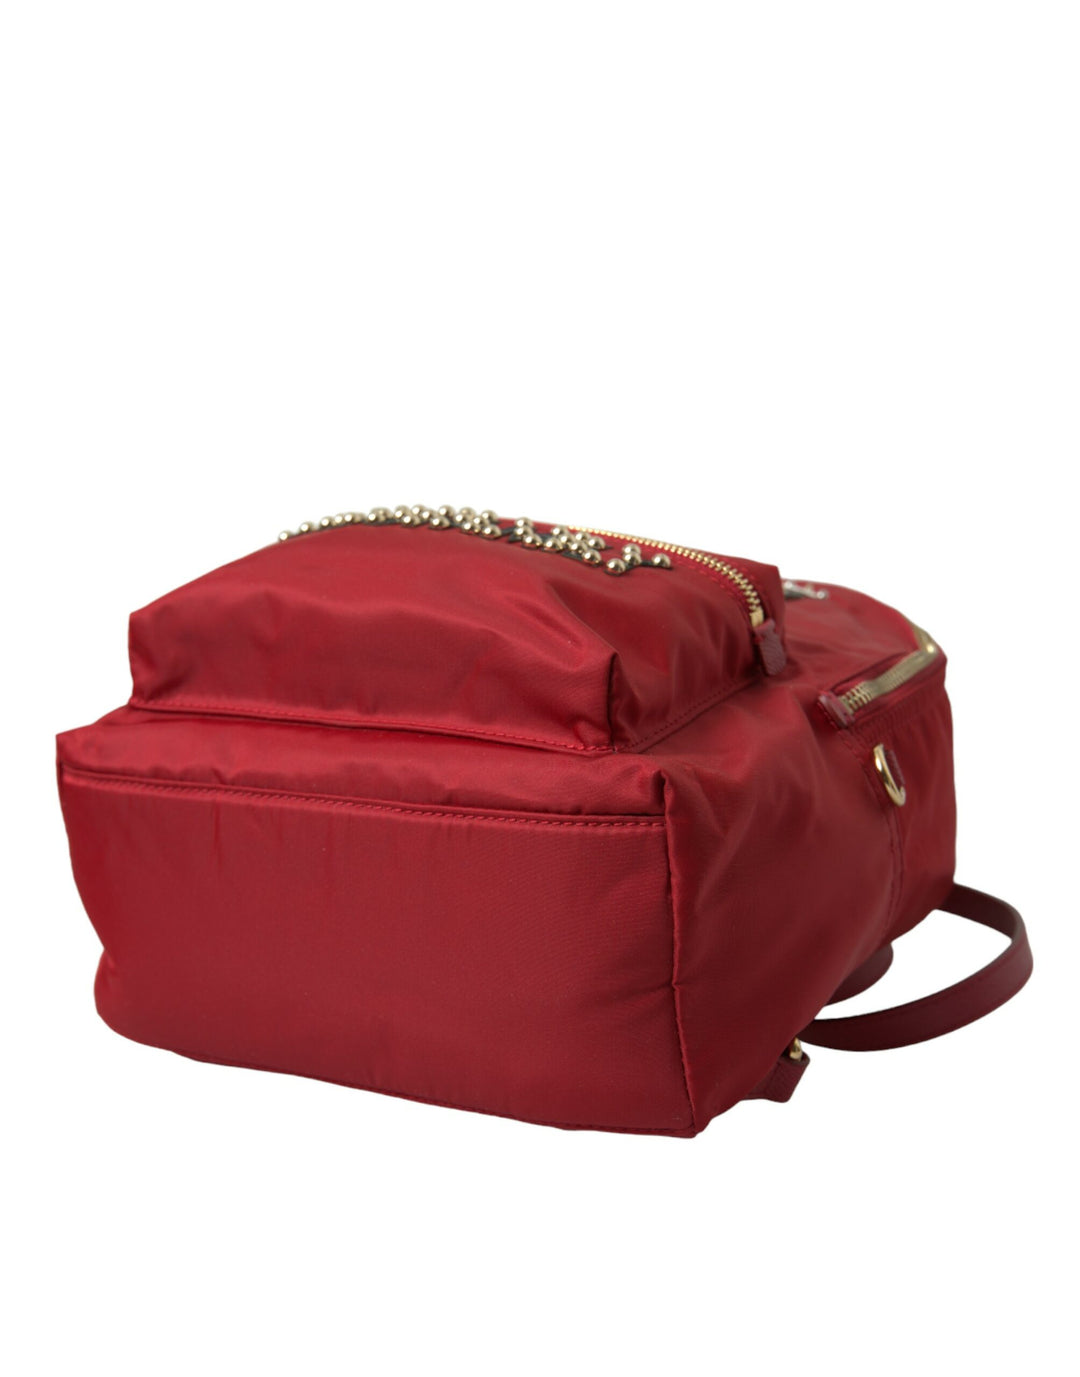 Dolce & Gabbana Embellished Red Backpack with Gold Detailing